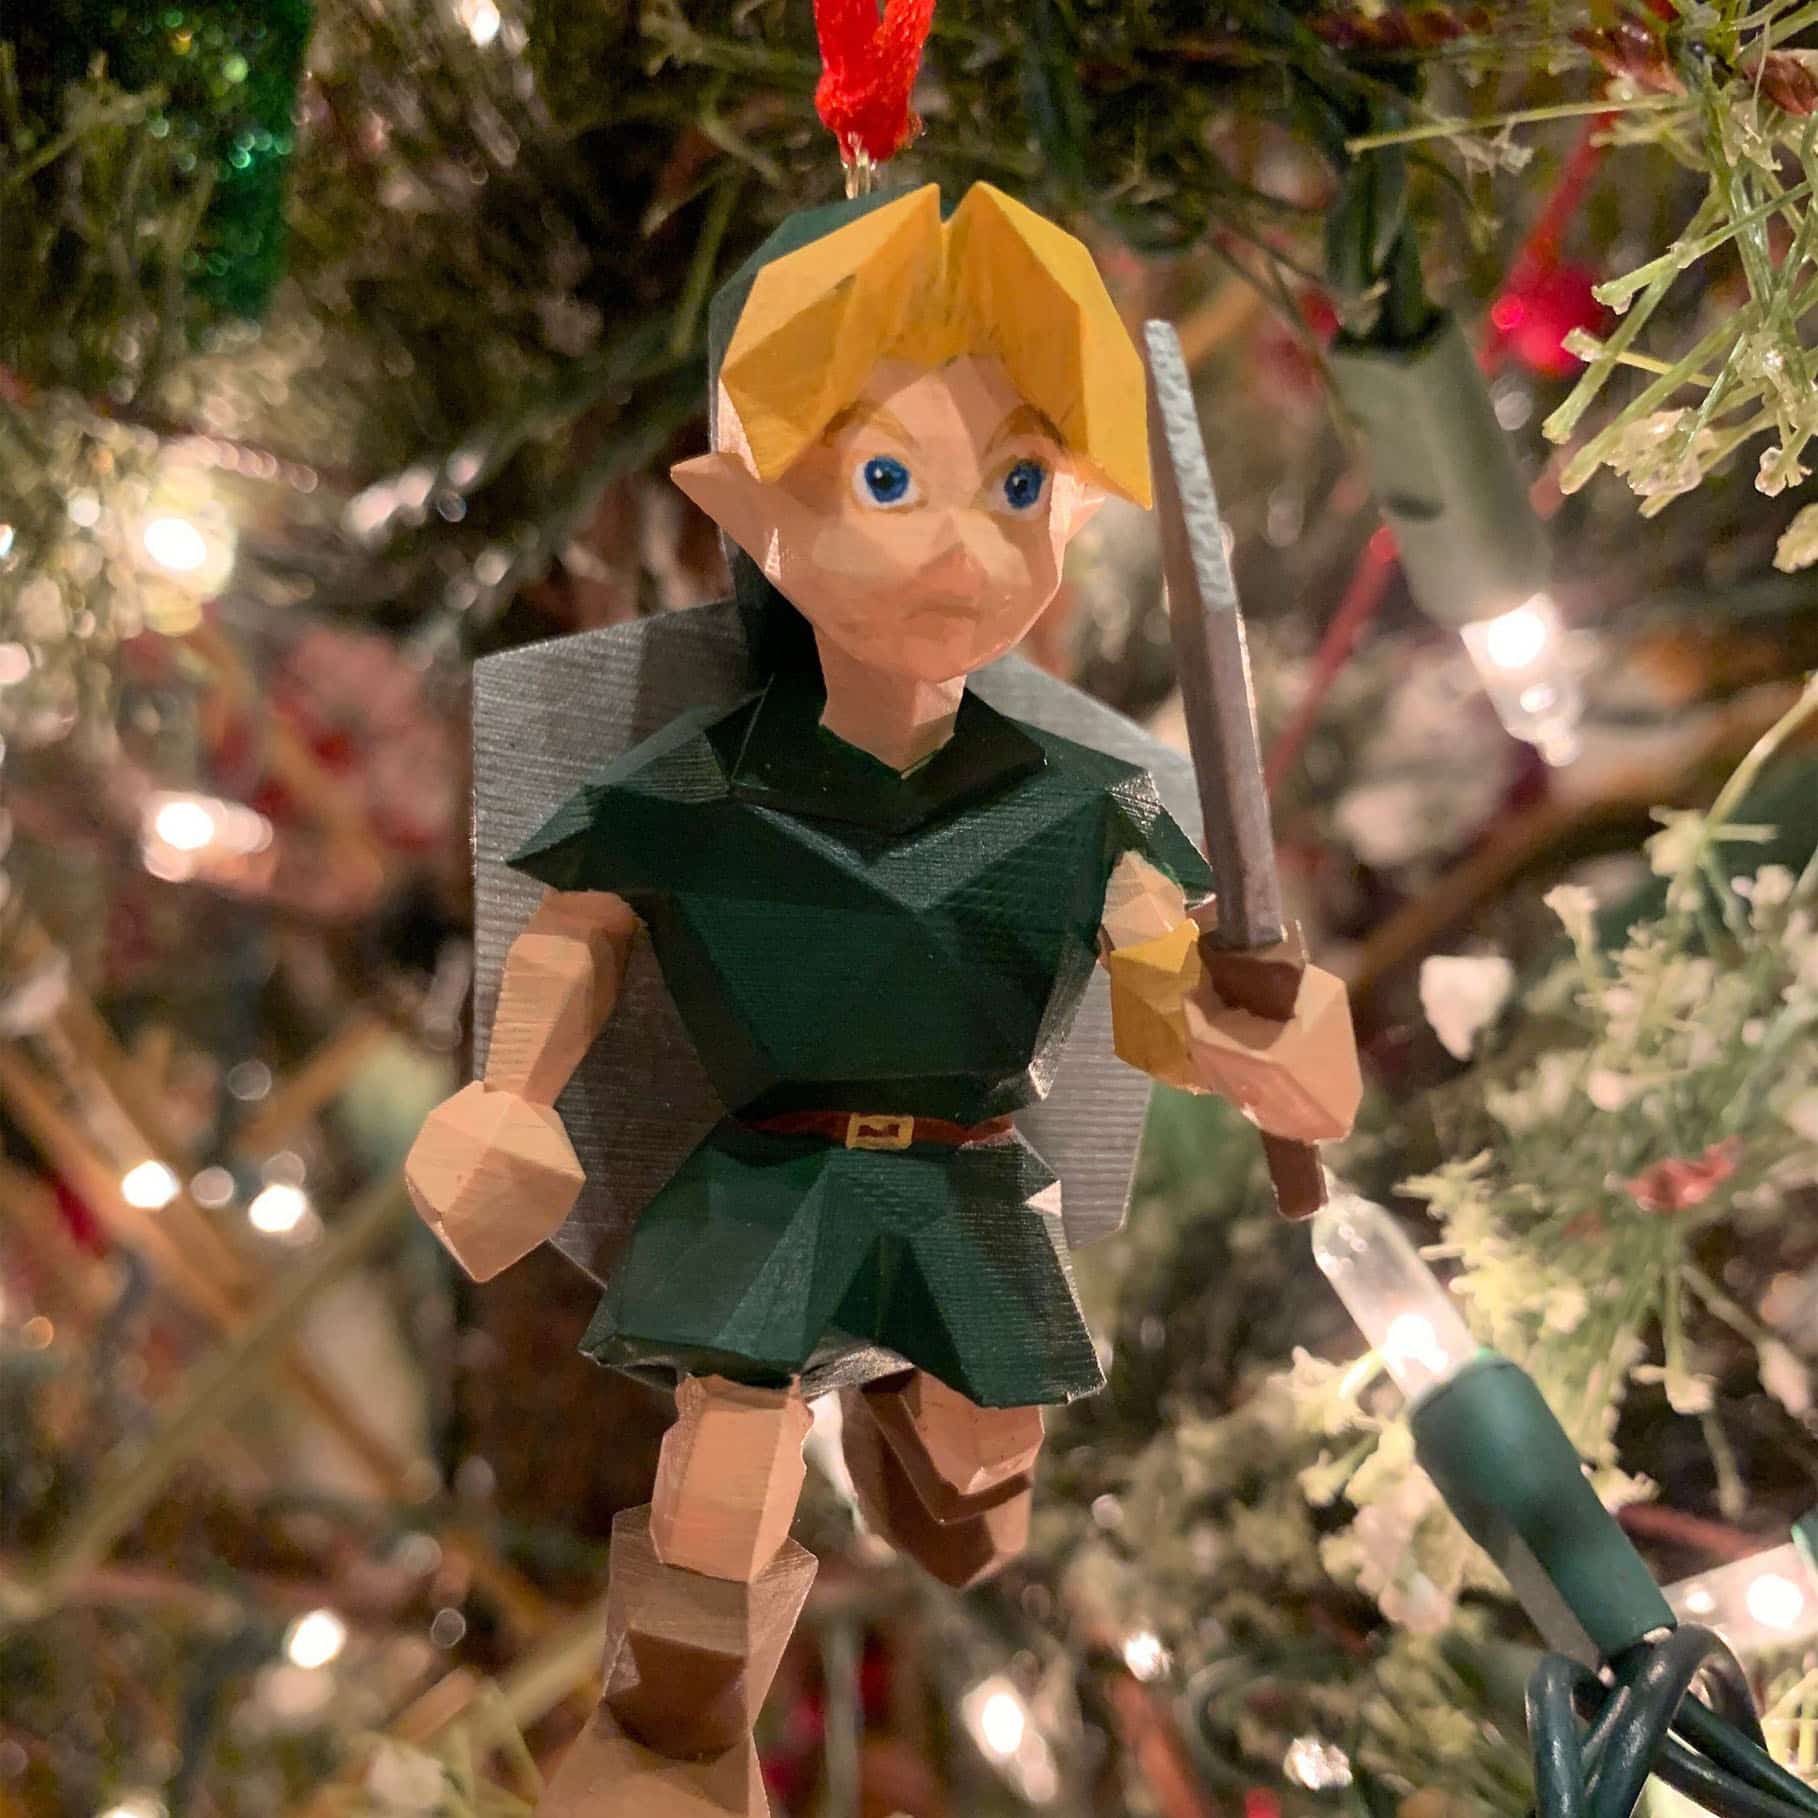 Legend of Zelda Christmas Ornaments